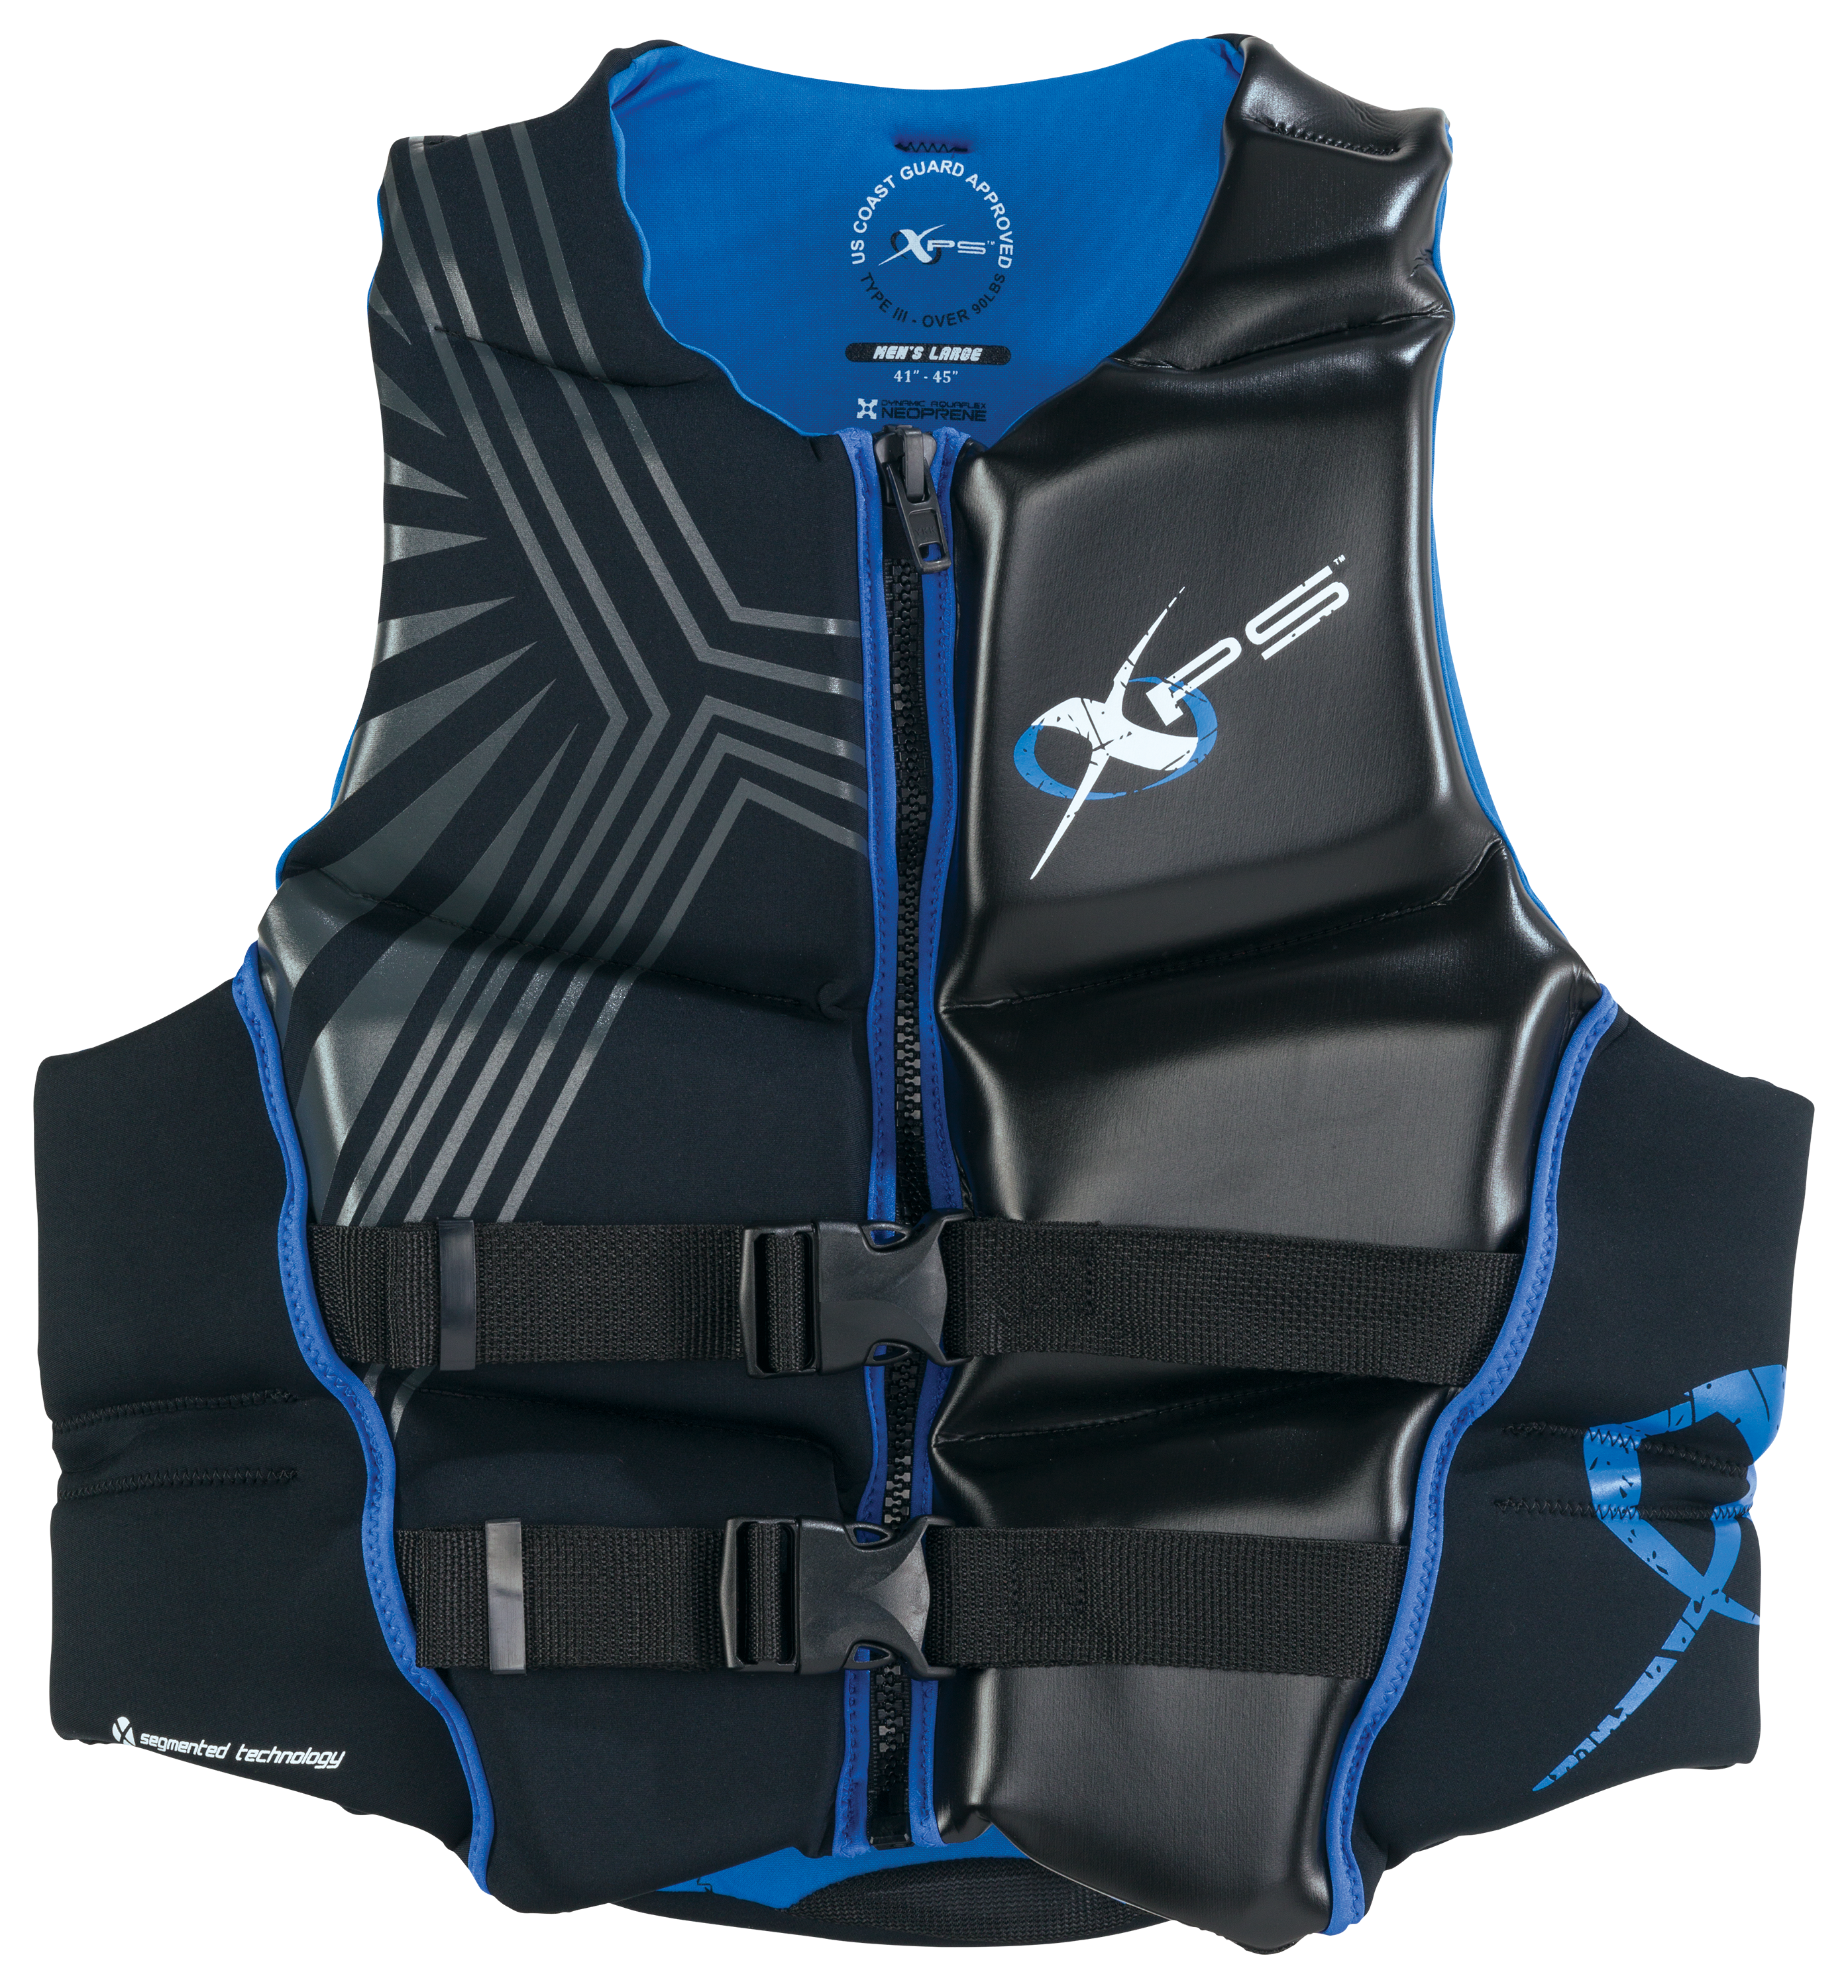 XPS Platinum Neoprene Segmented Life Jacket for Men - Black Royal - 3XL